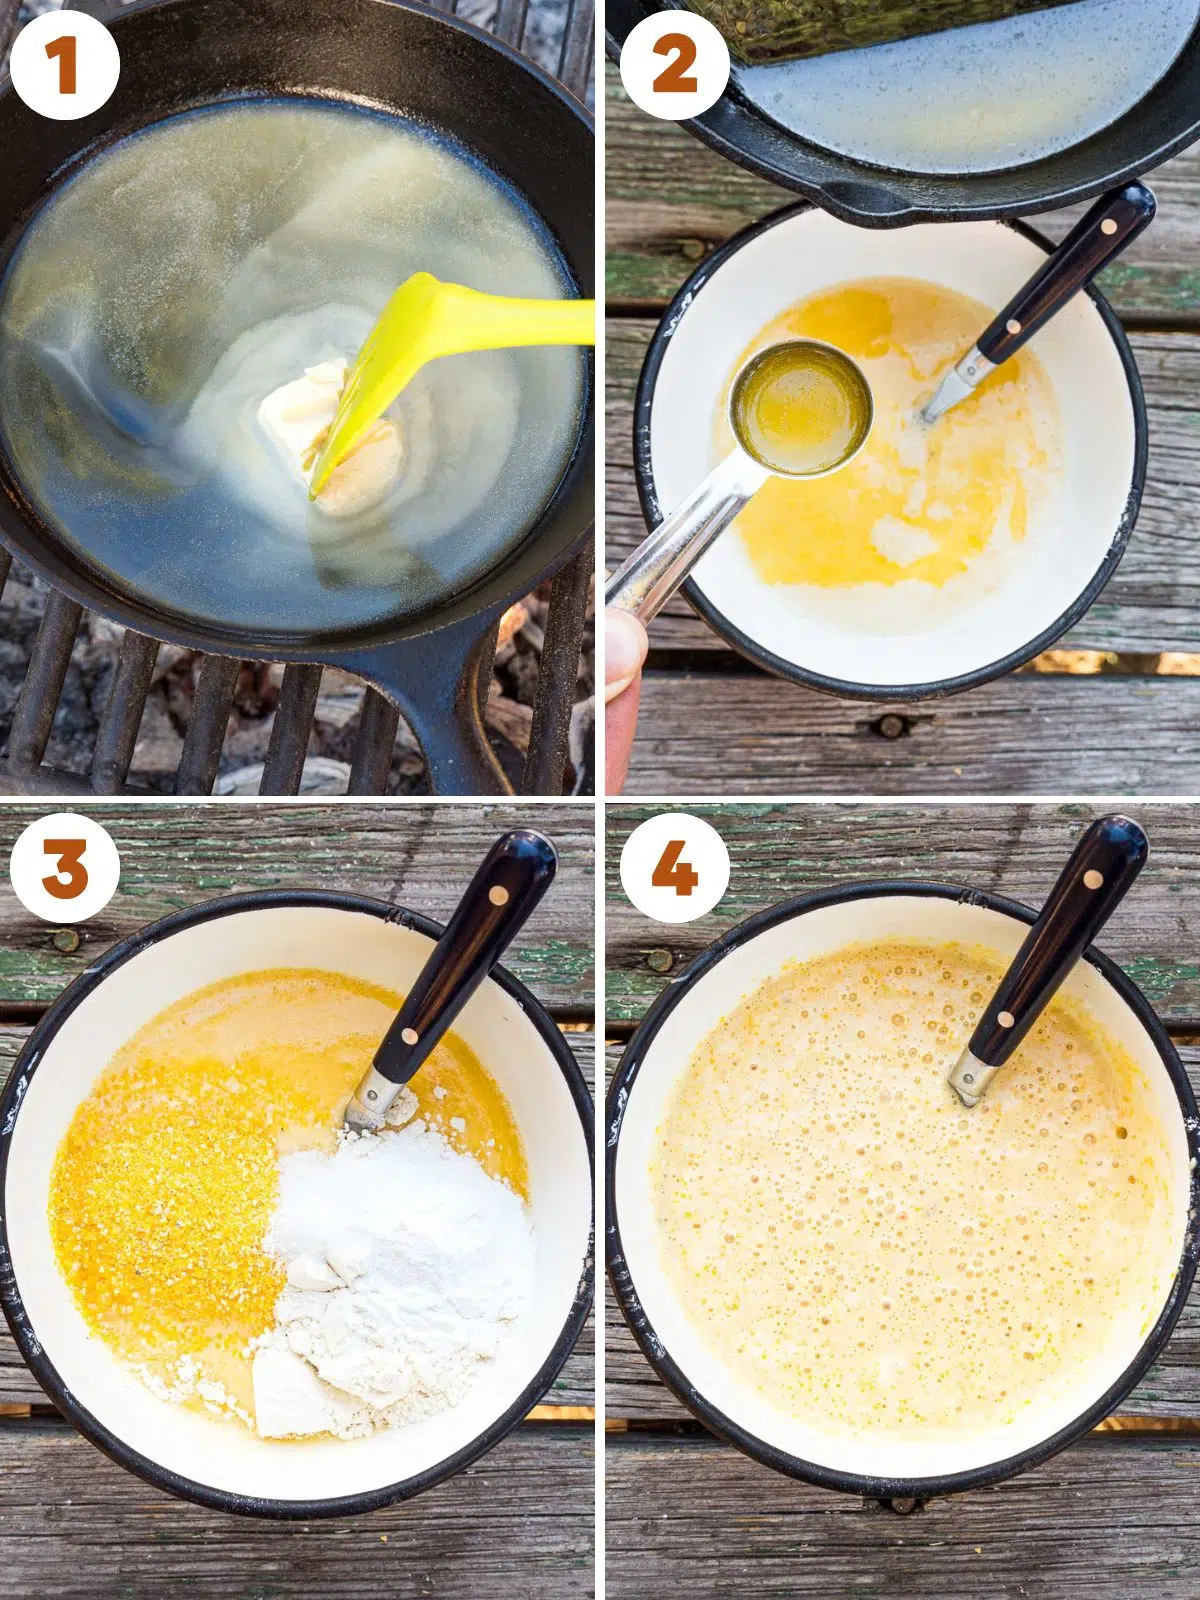 Steps to make cornbread batter